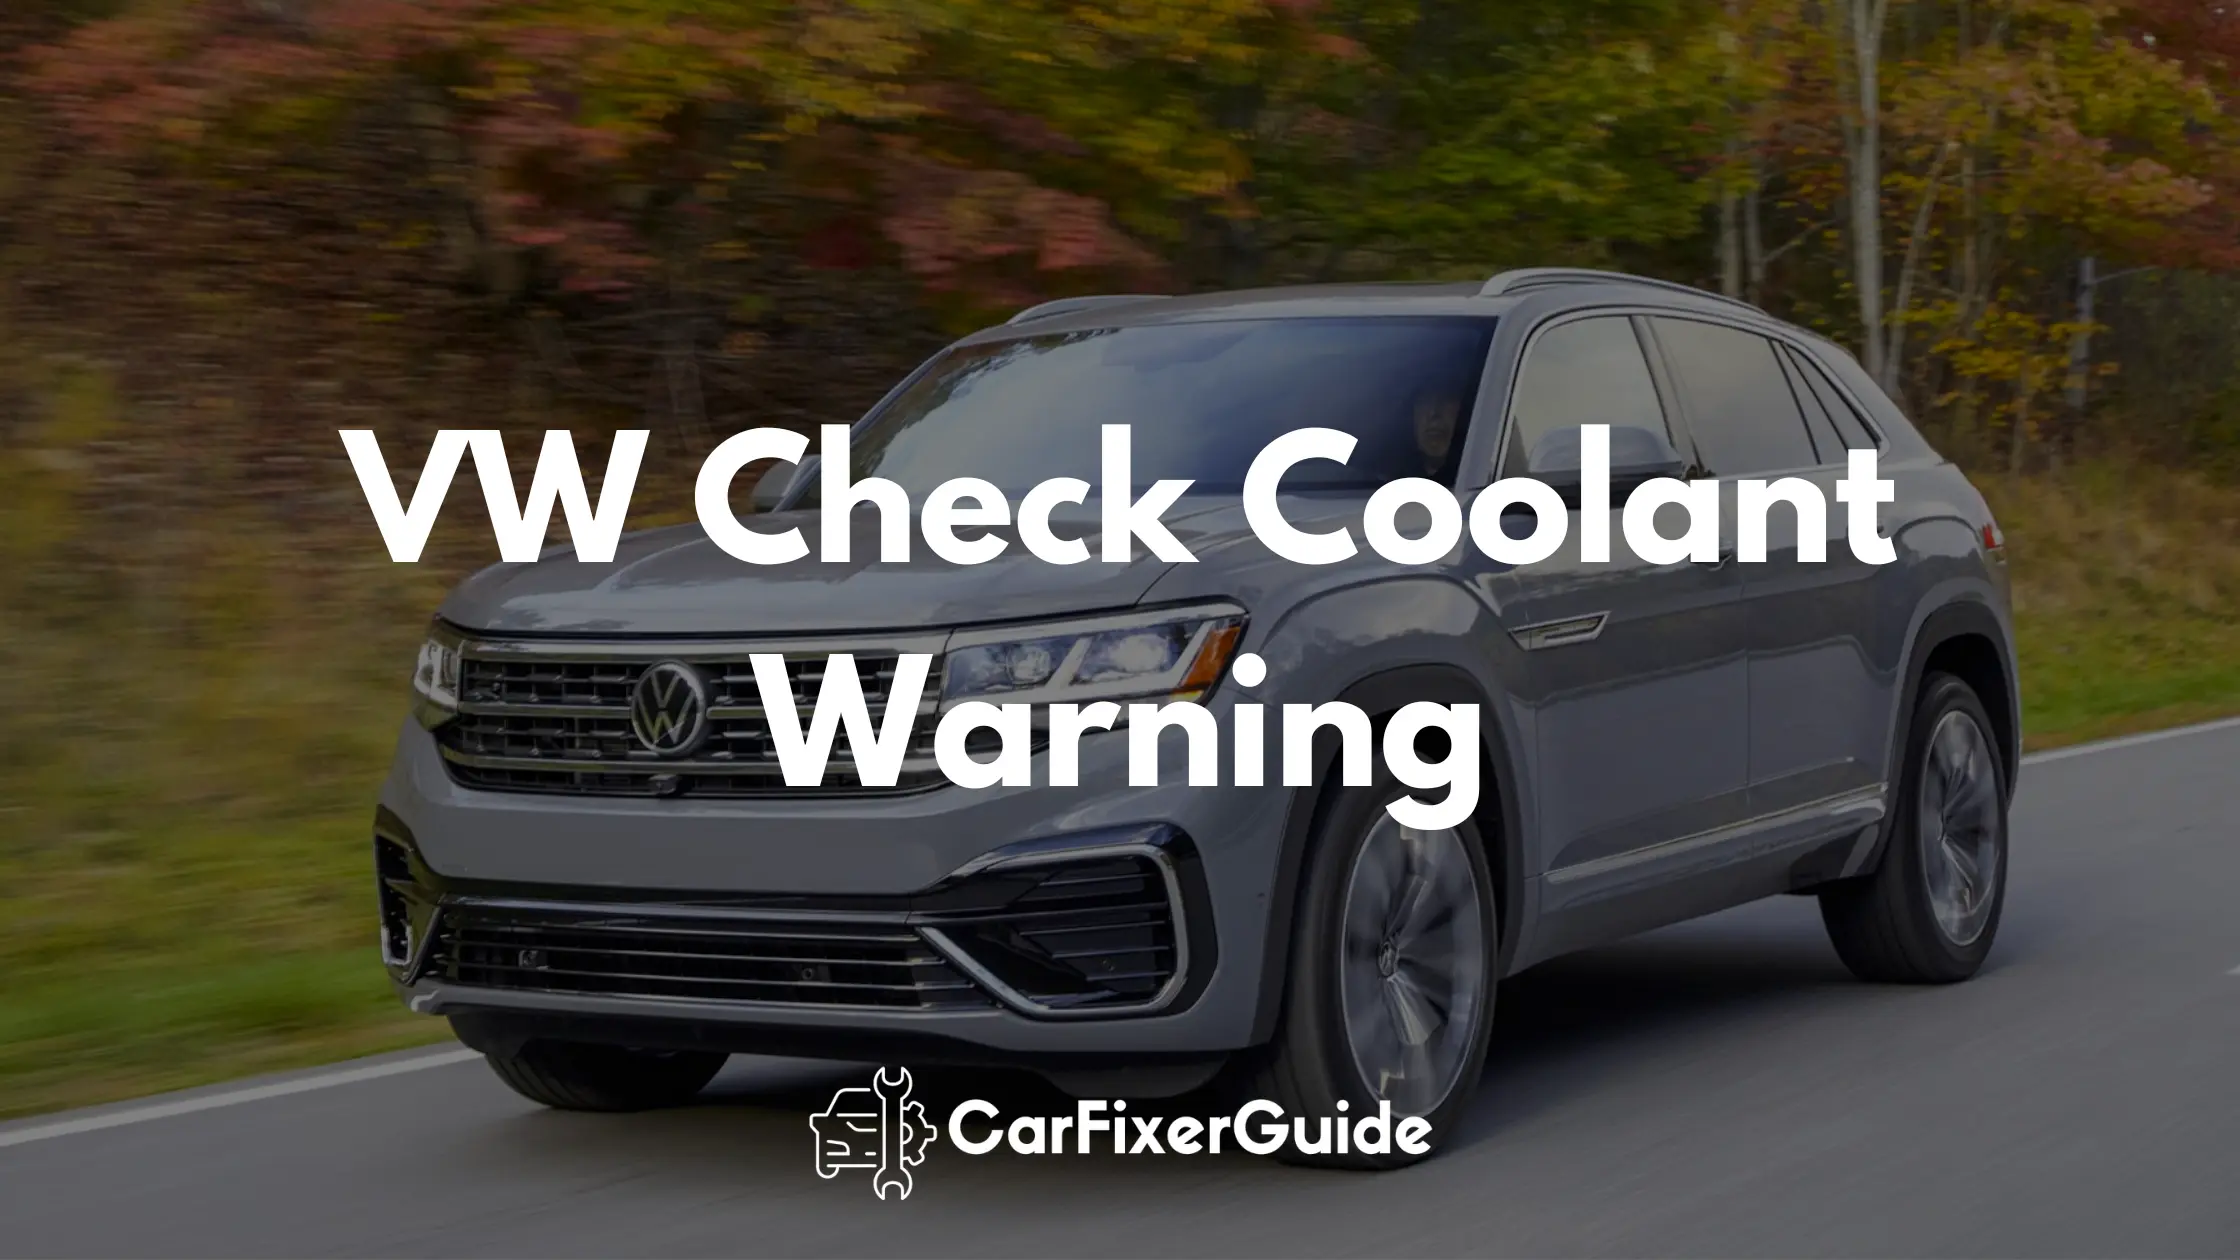 VW Check Coolant Warning